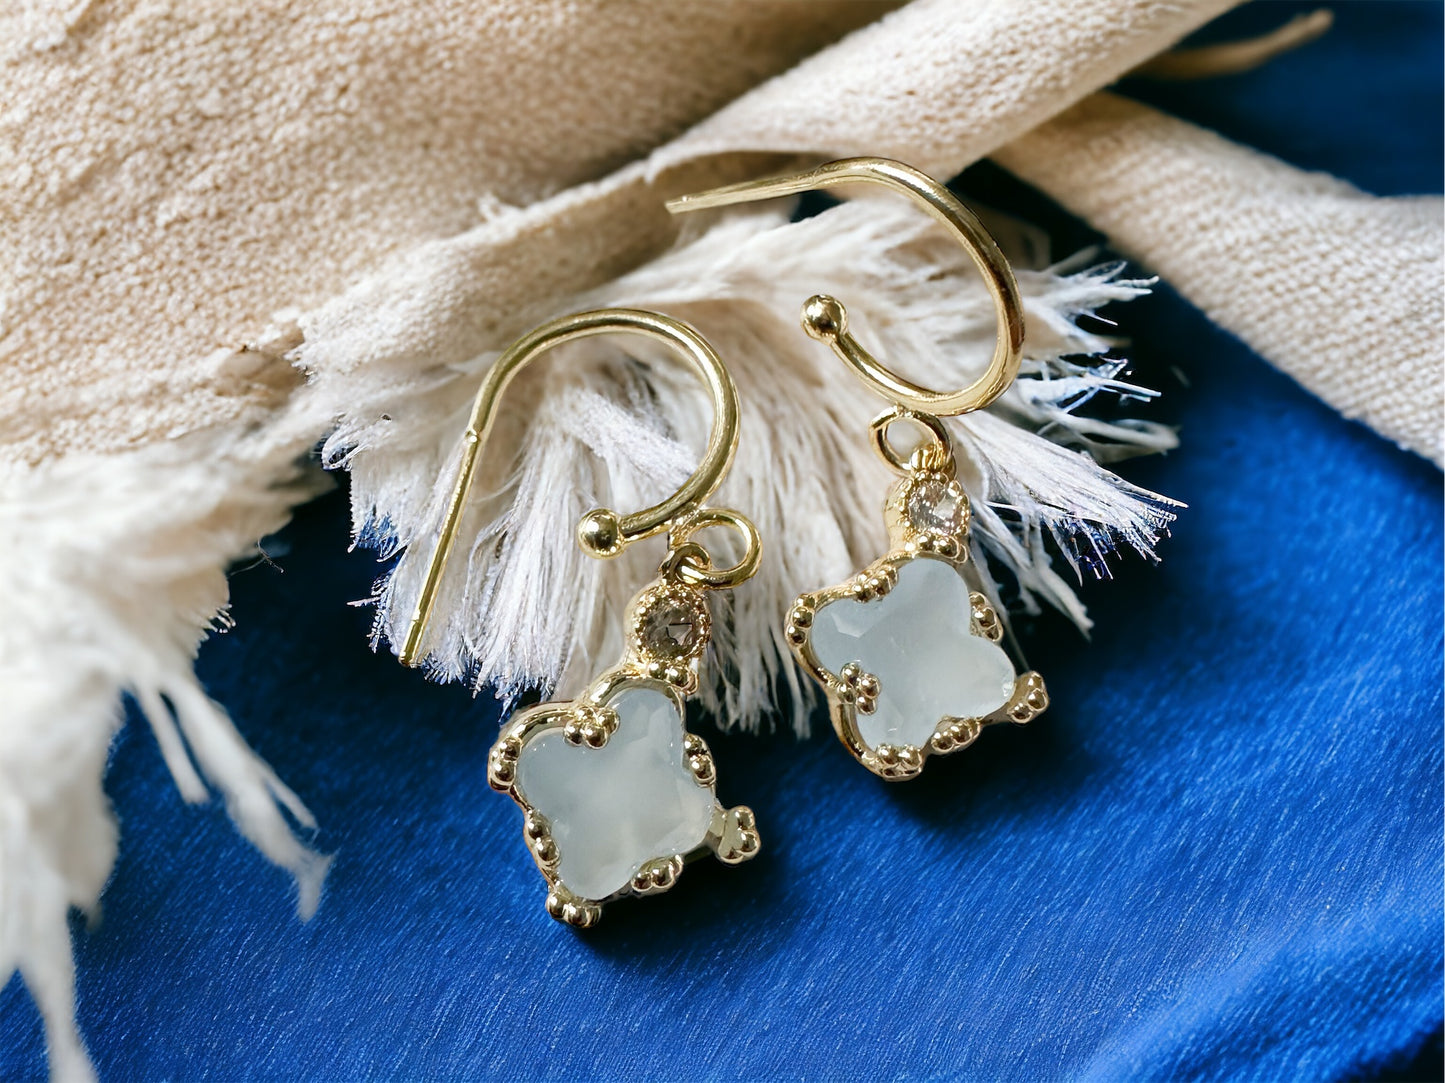 Tidepool earrings